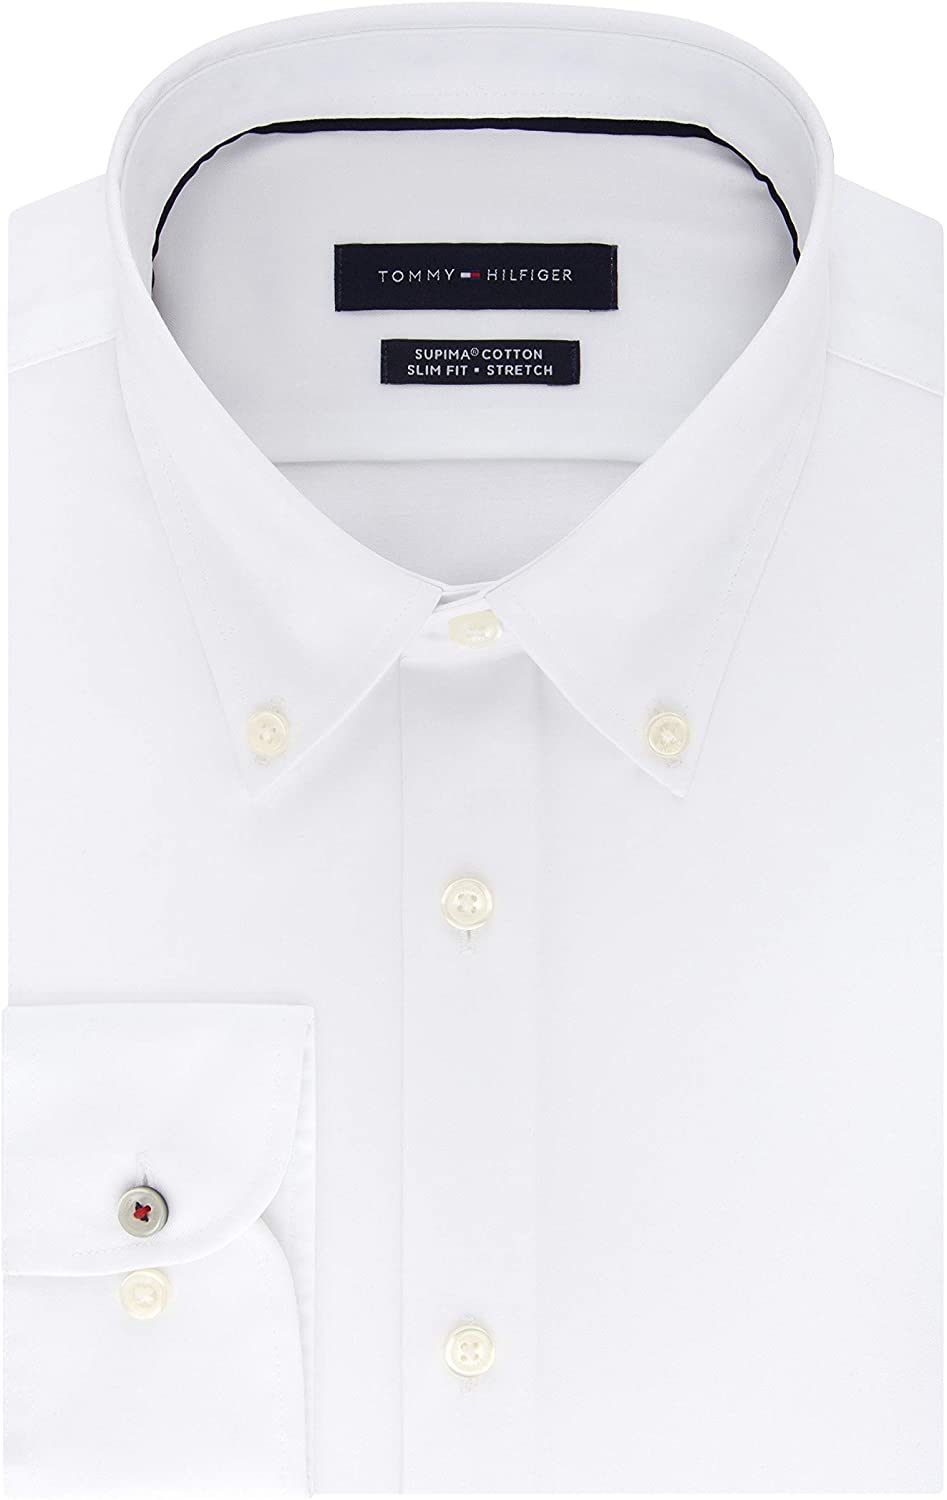 Hilfiger Men's Dress Shirt Slim Fit Stretch Solid, Pearl White, Size |